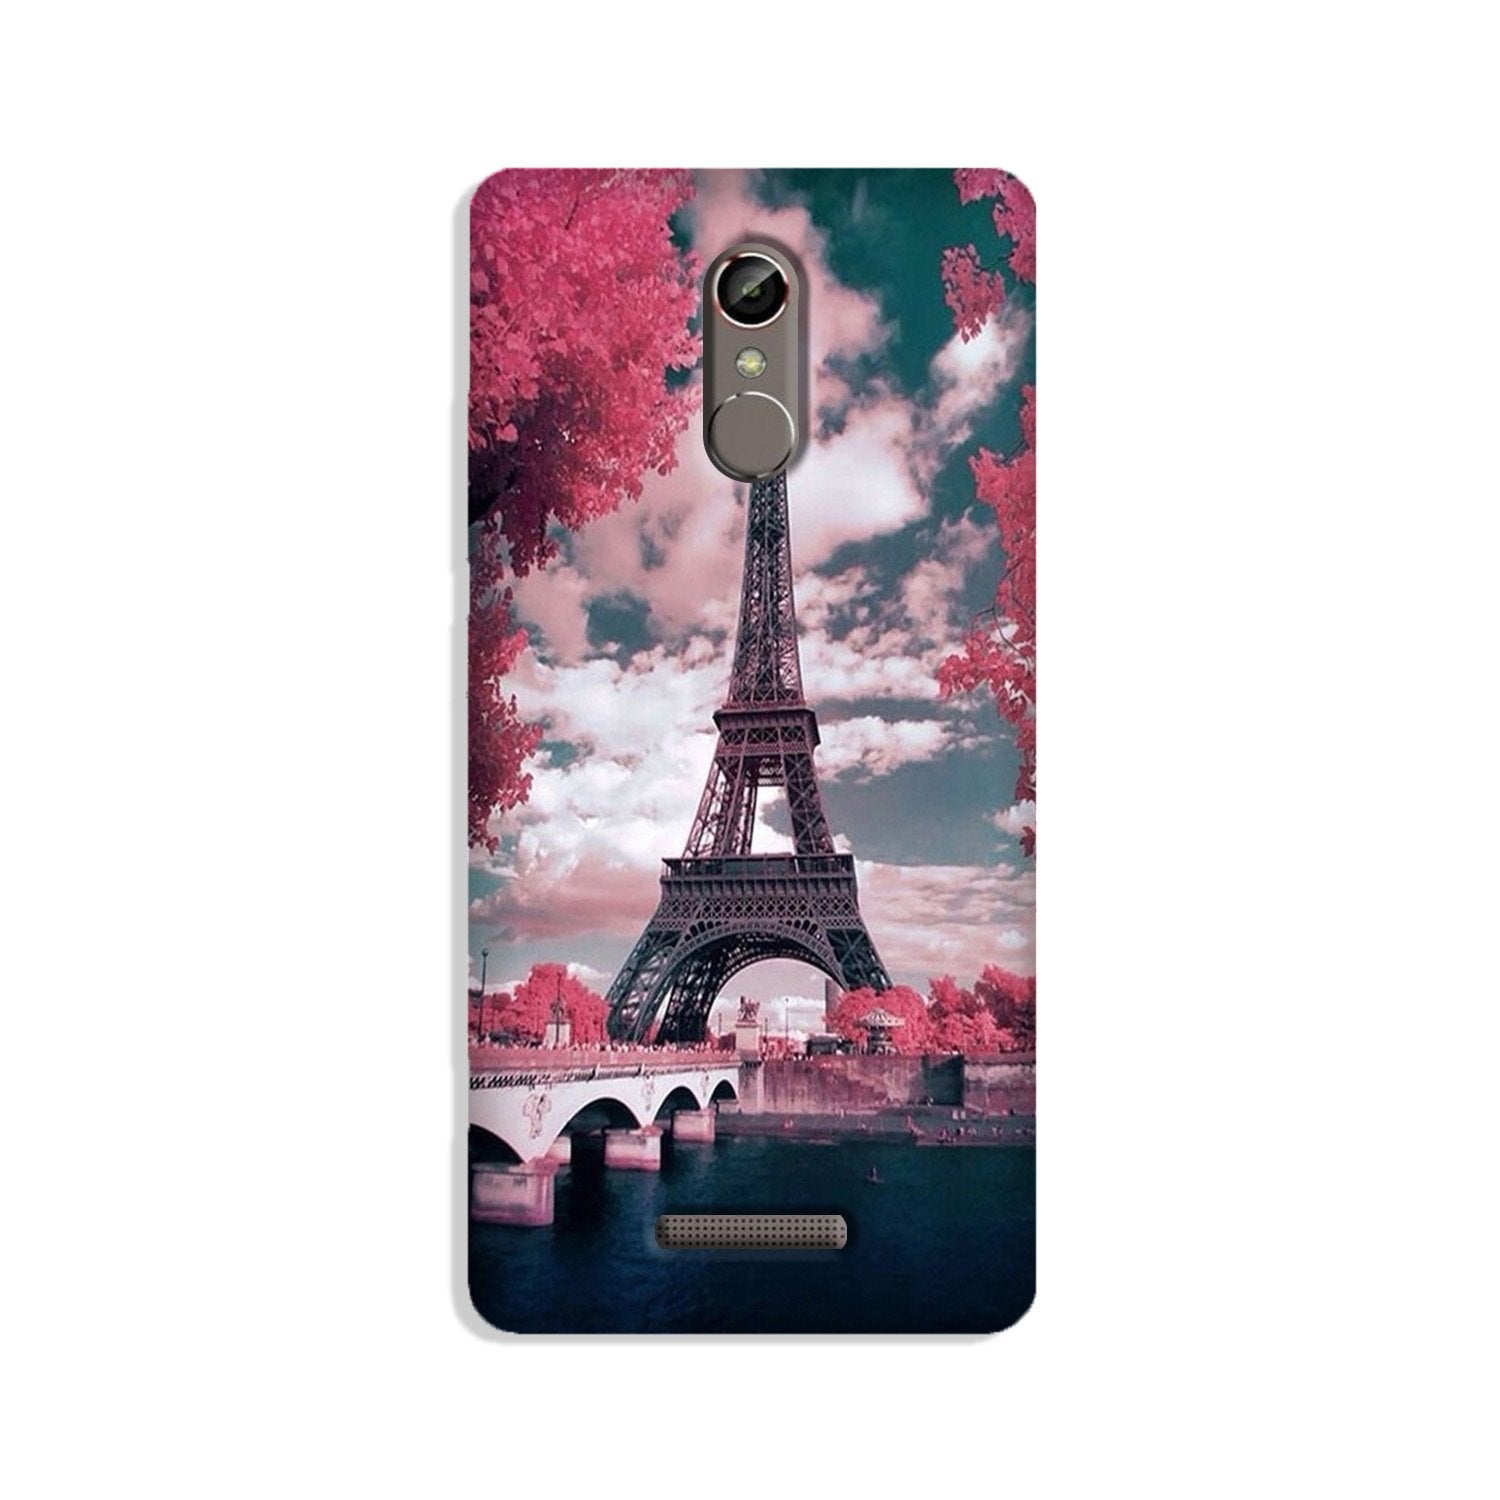 Eiffel Tower Case for Redmi Note 3(Design - 101)